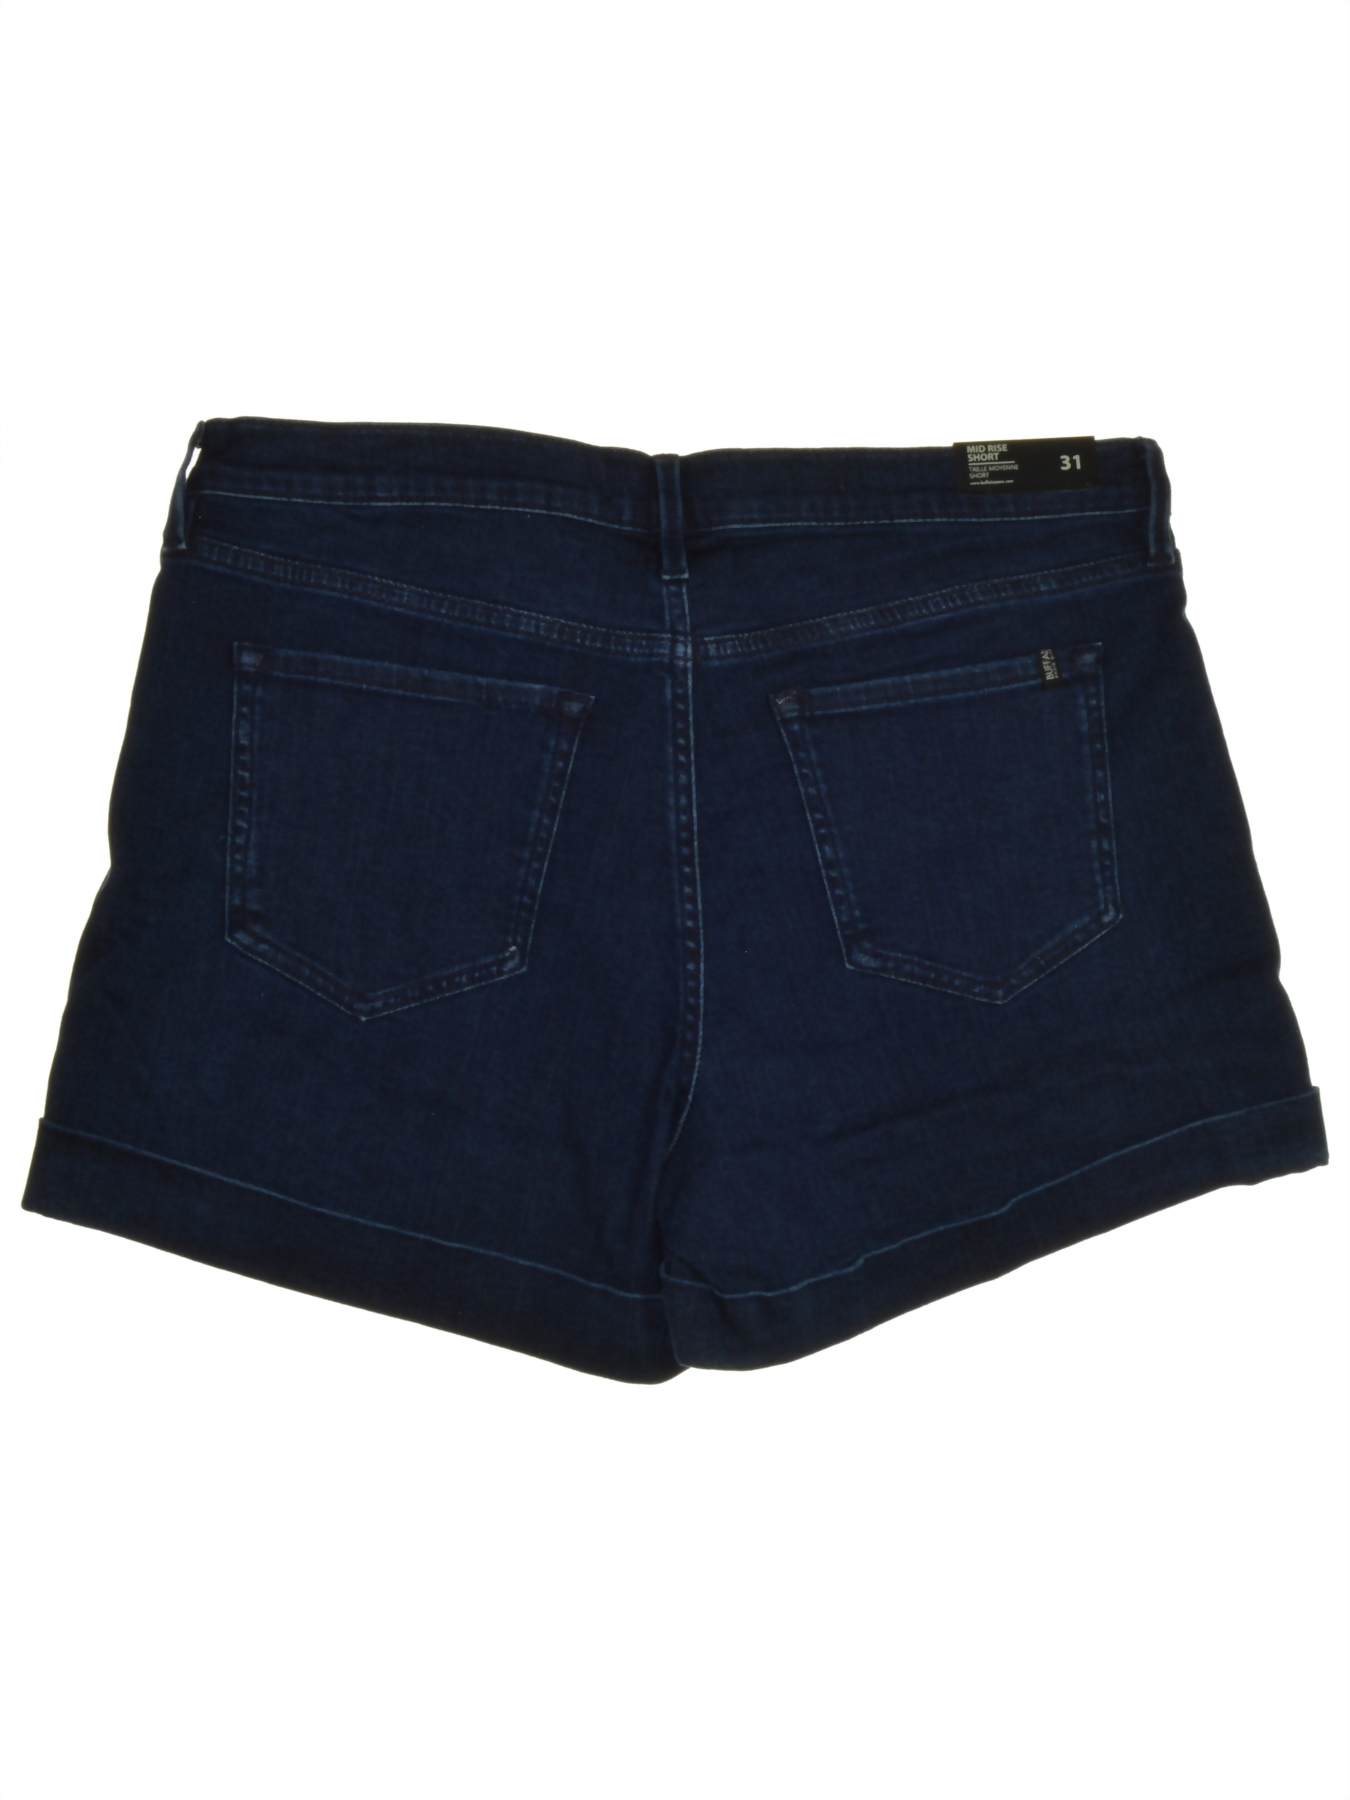 Buffalo Jeans Women Size 31 Dark Blue Denim Shorts Pants | Canerra